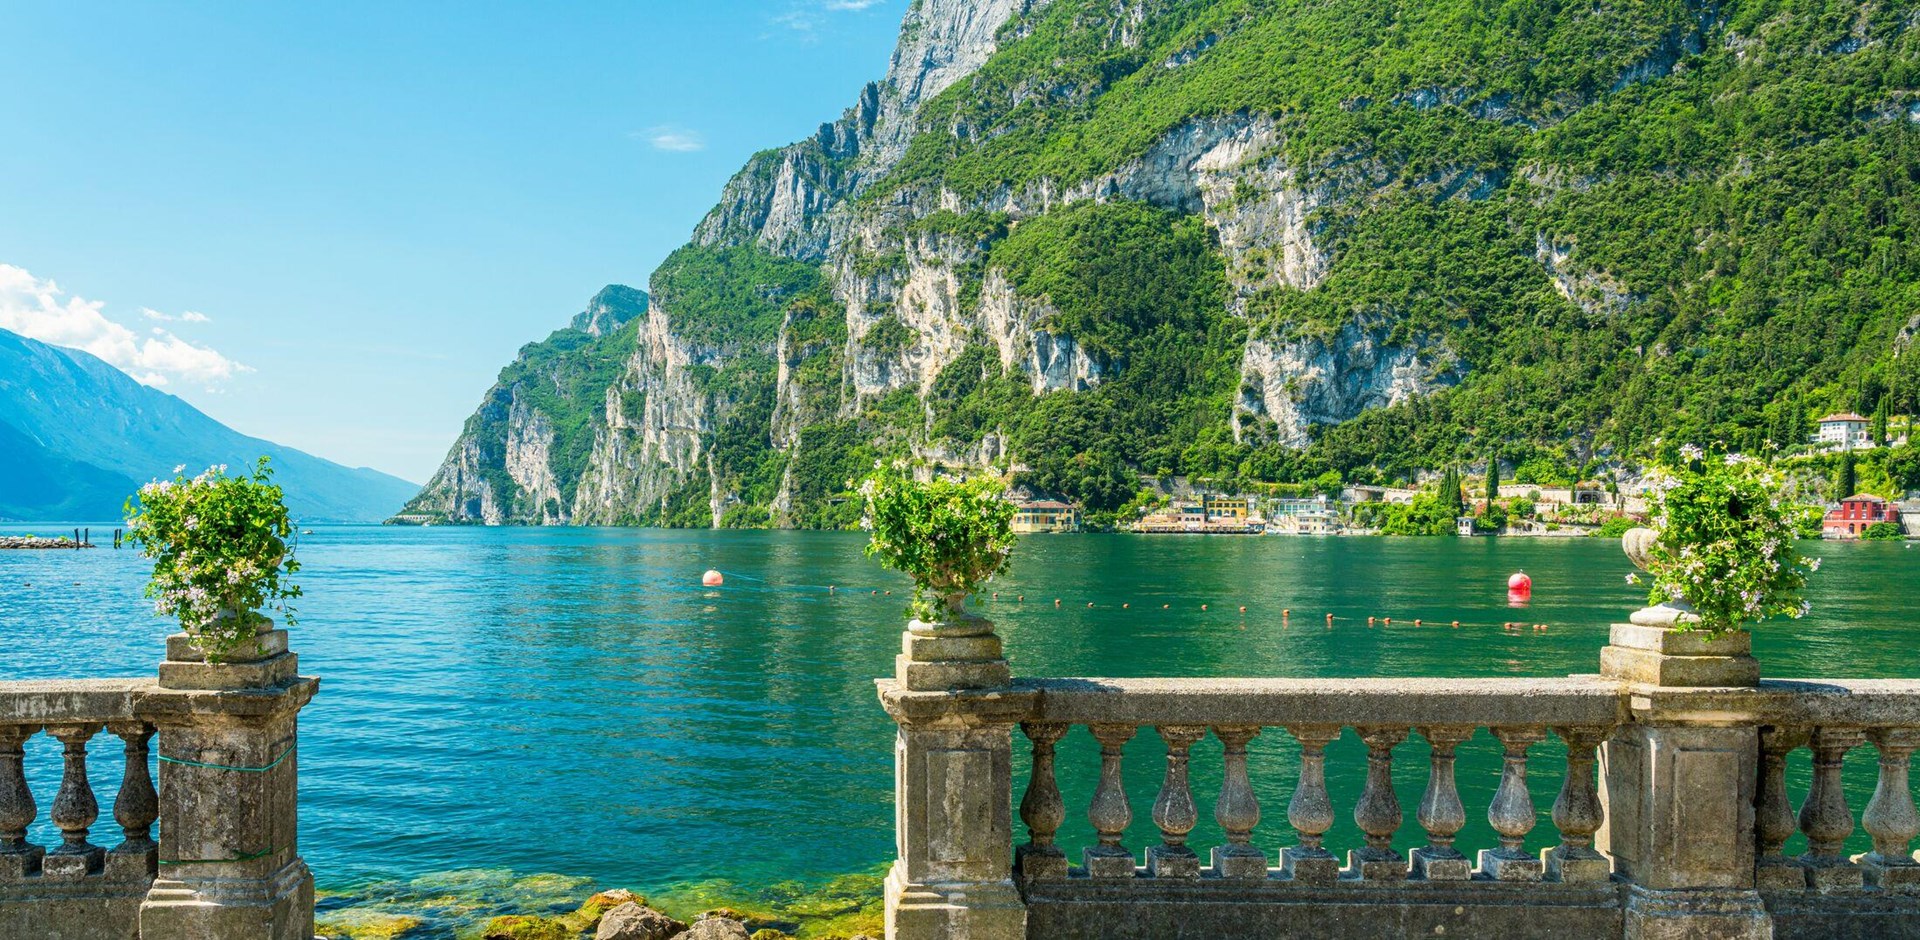 The picturesque town of Riva del Garda on Lake Garda. Province of Trento, Trentino Alto Adige, Italy.